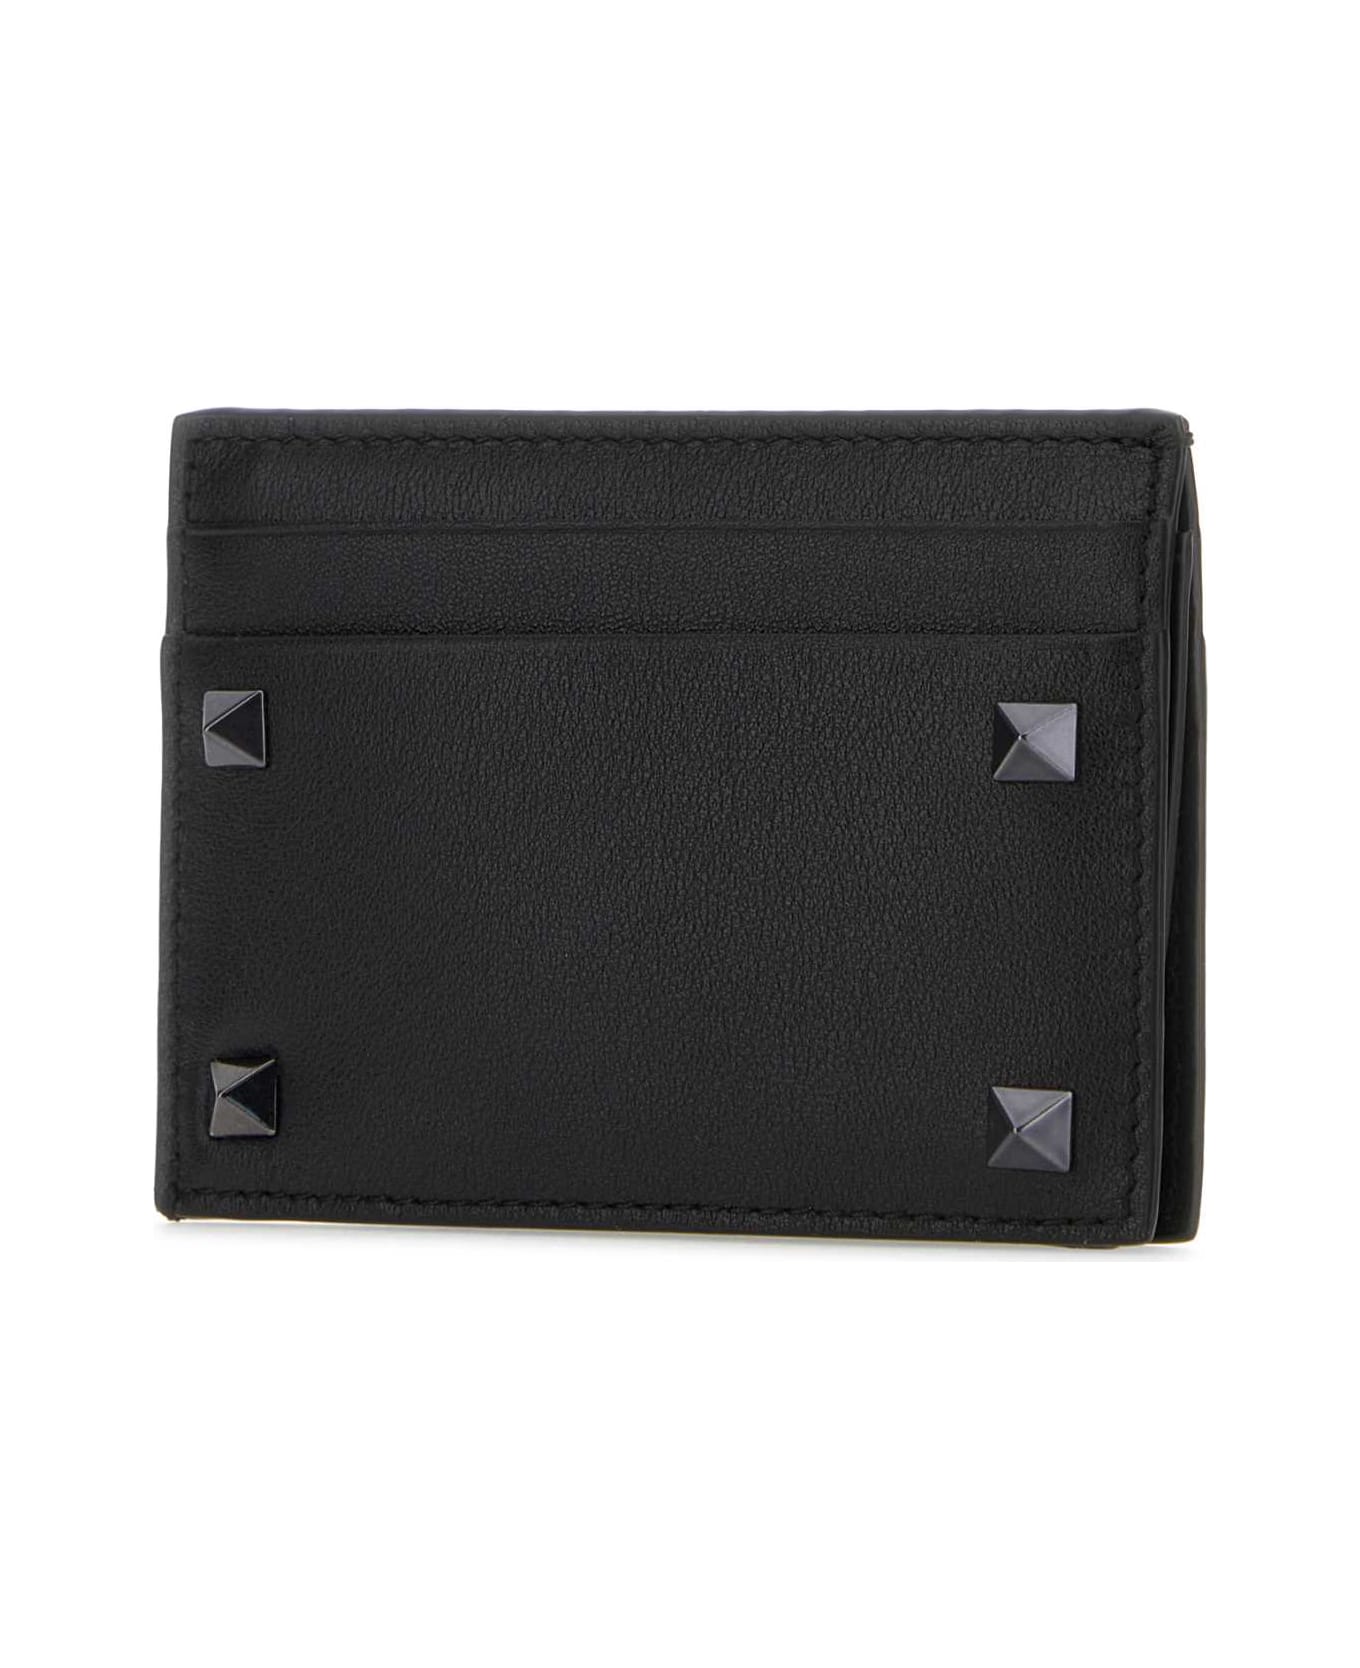 Valentino Garavani Black Leather Rockstud Card Holder - NERO